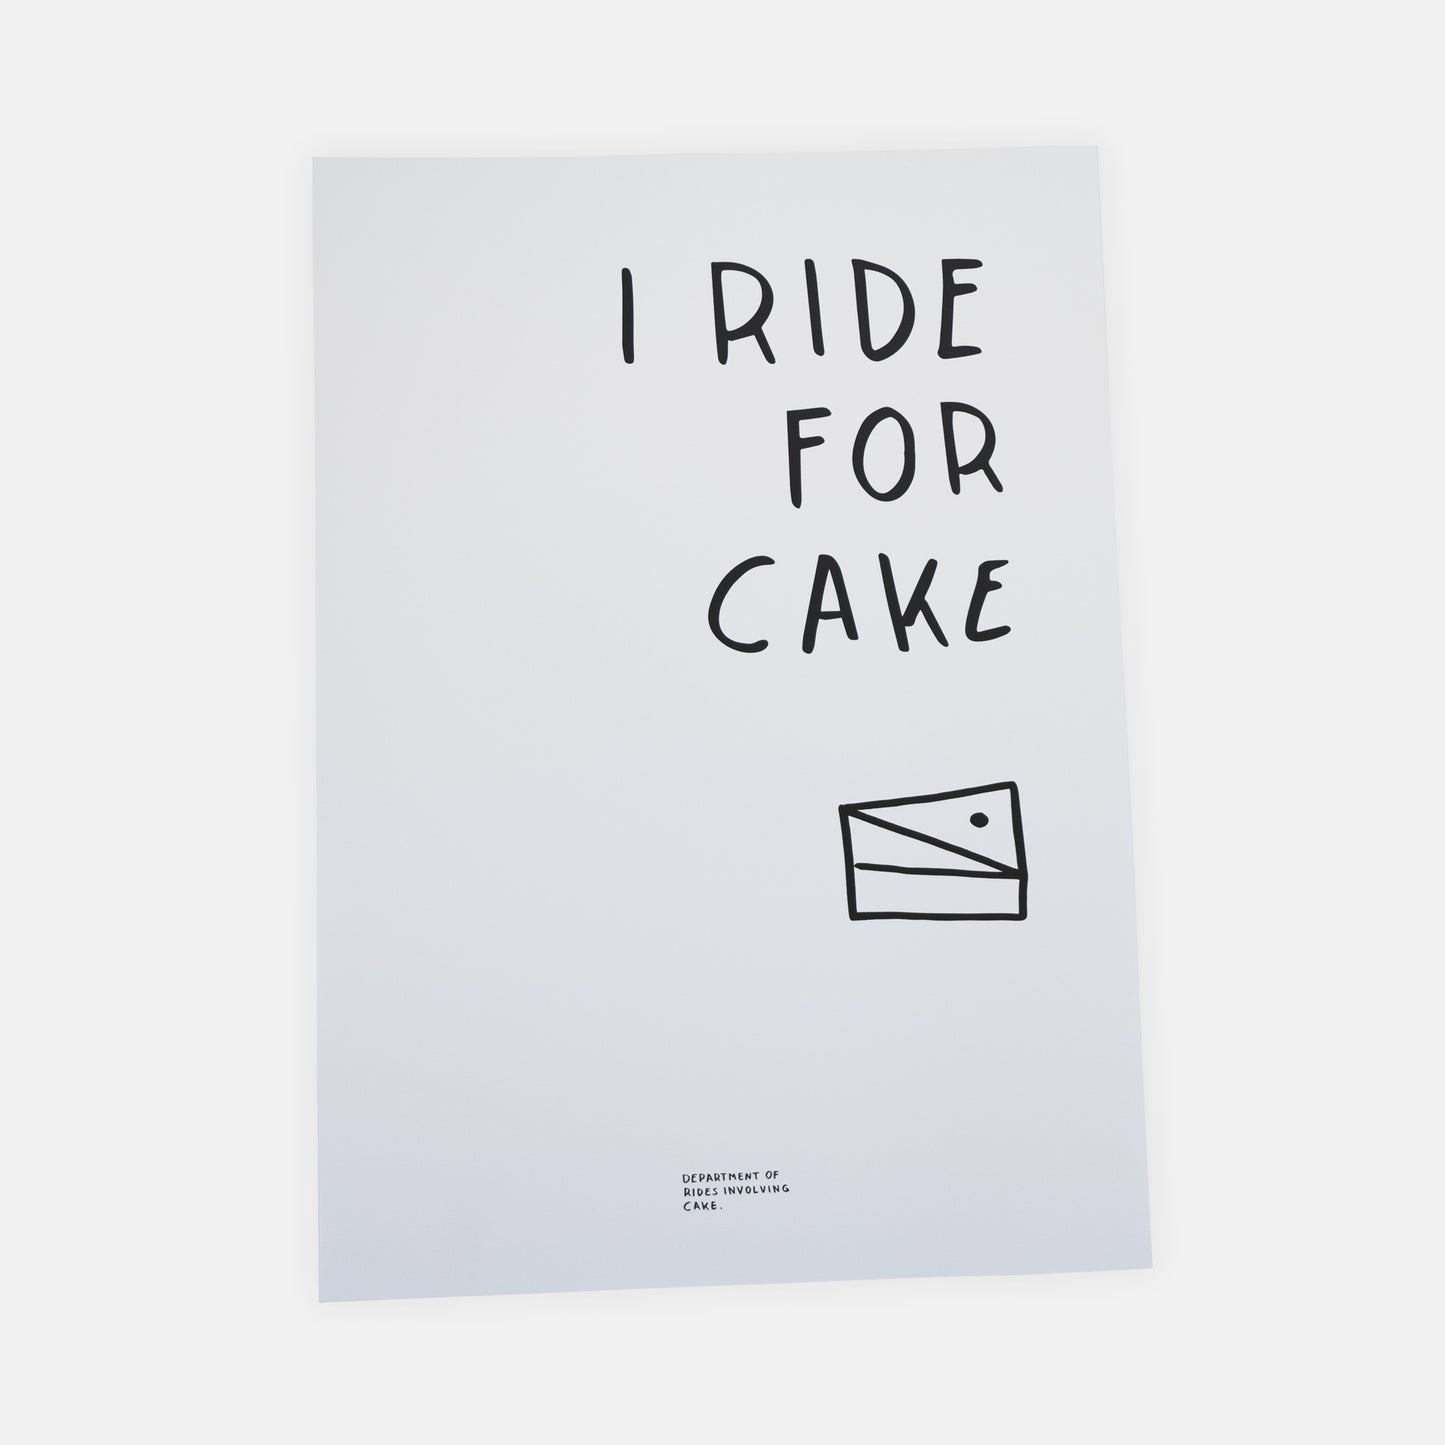 "I ride for cake" Poster